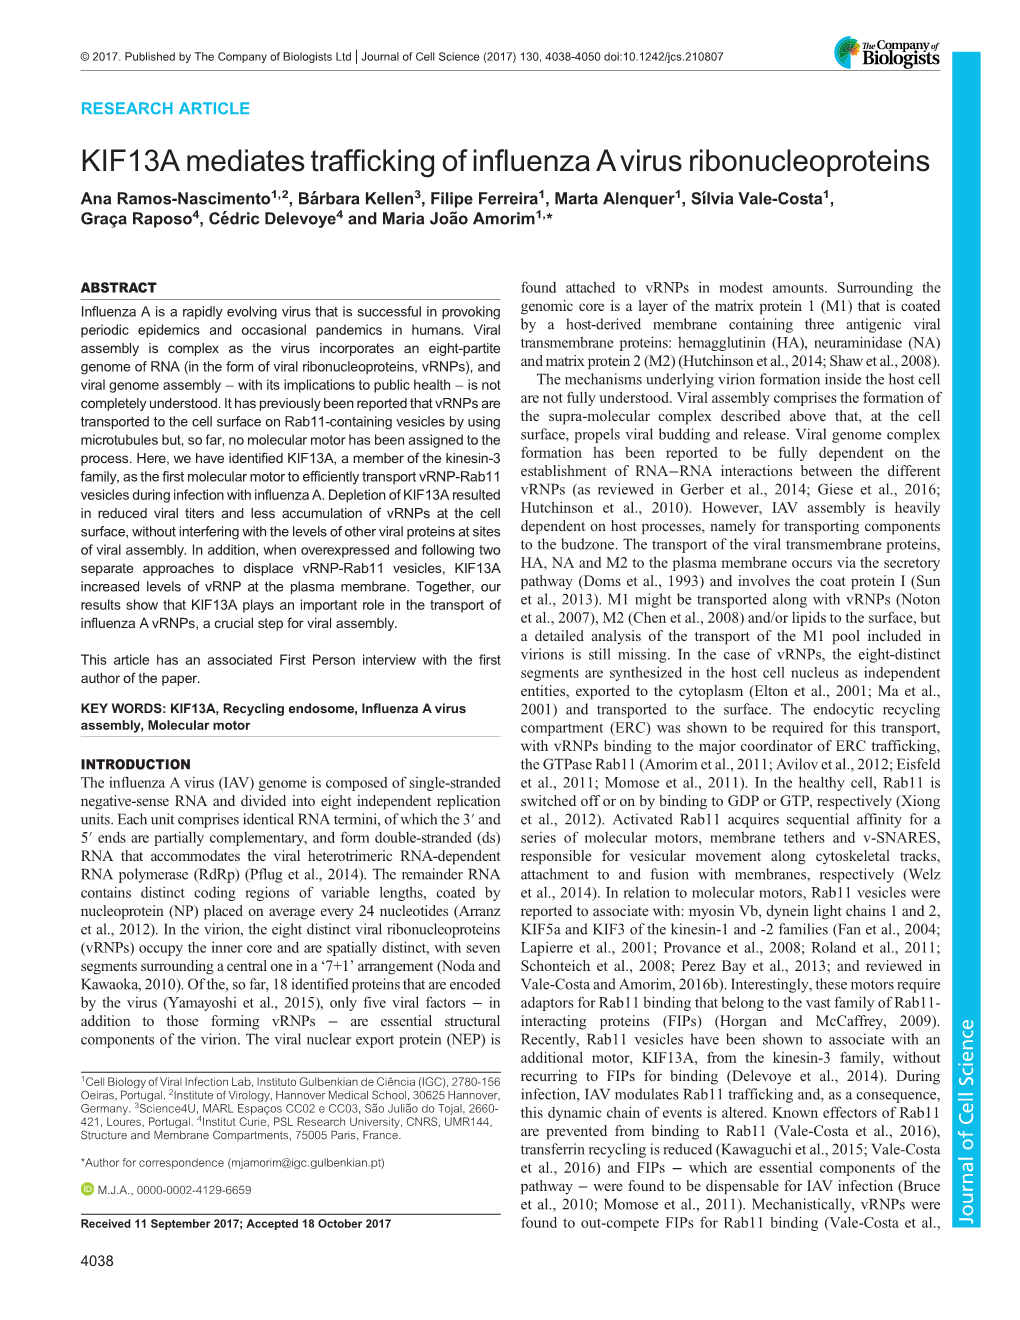 KIF13A Mediates Trafficking of Influenza a Virus Ribonucleoproteins